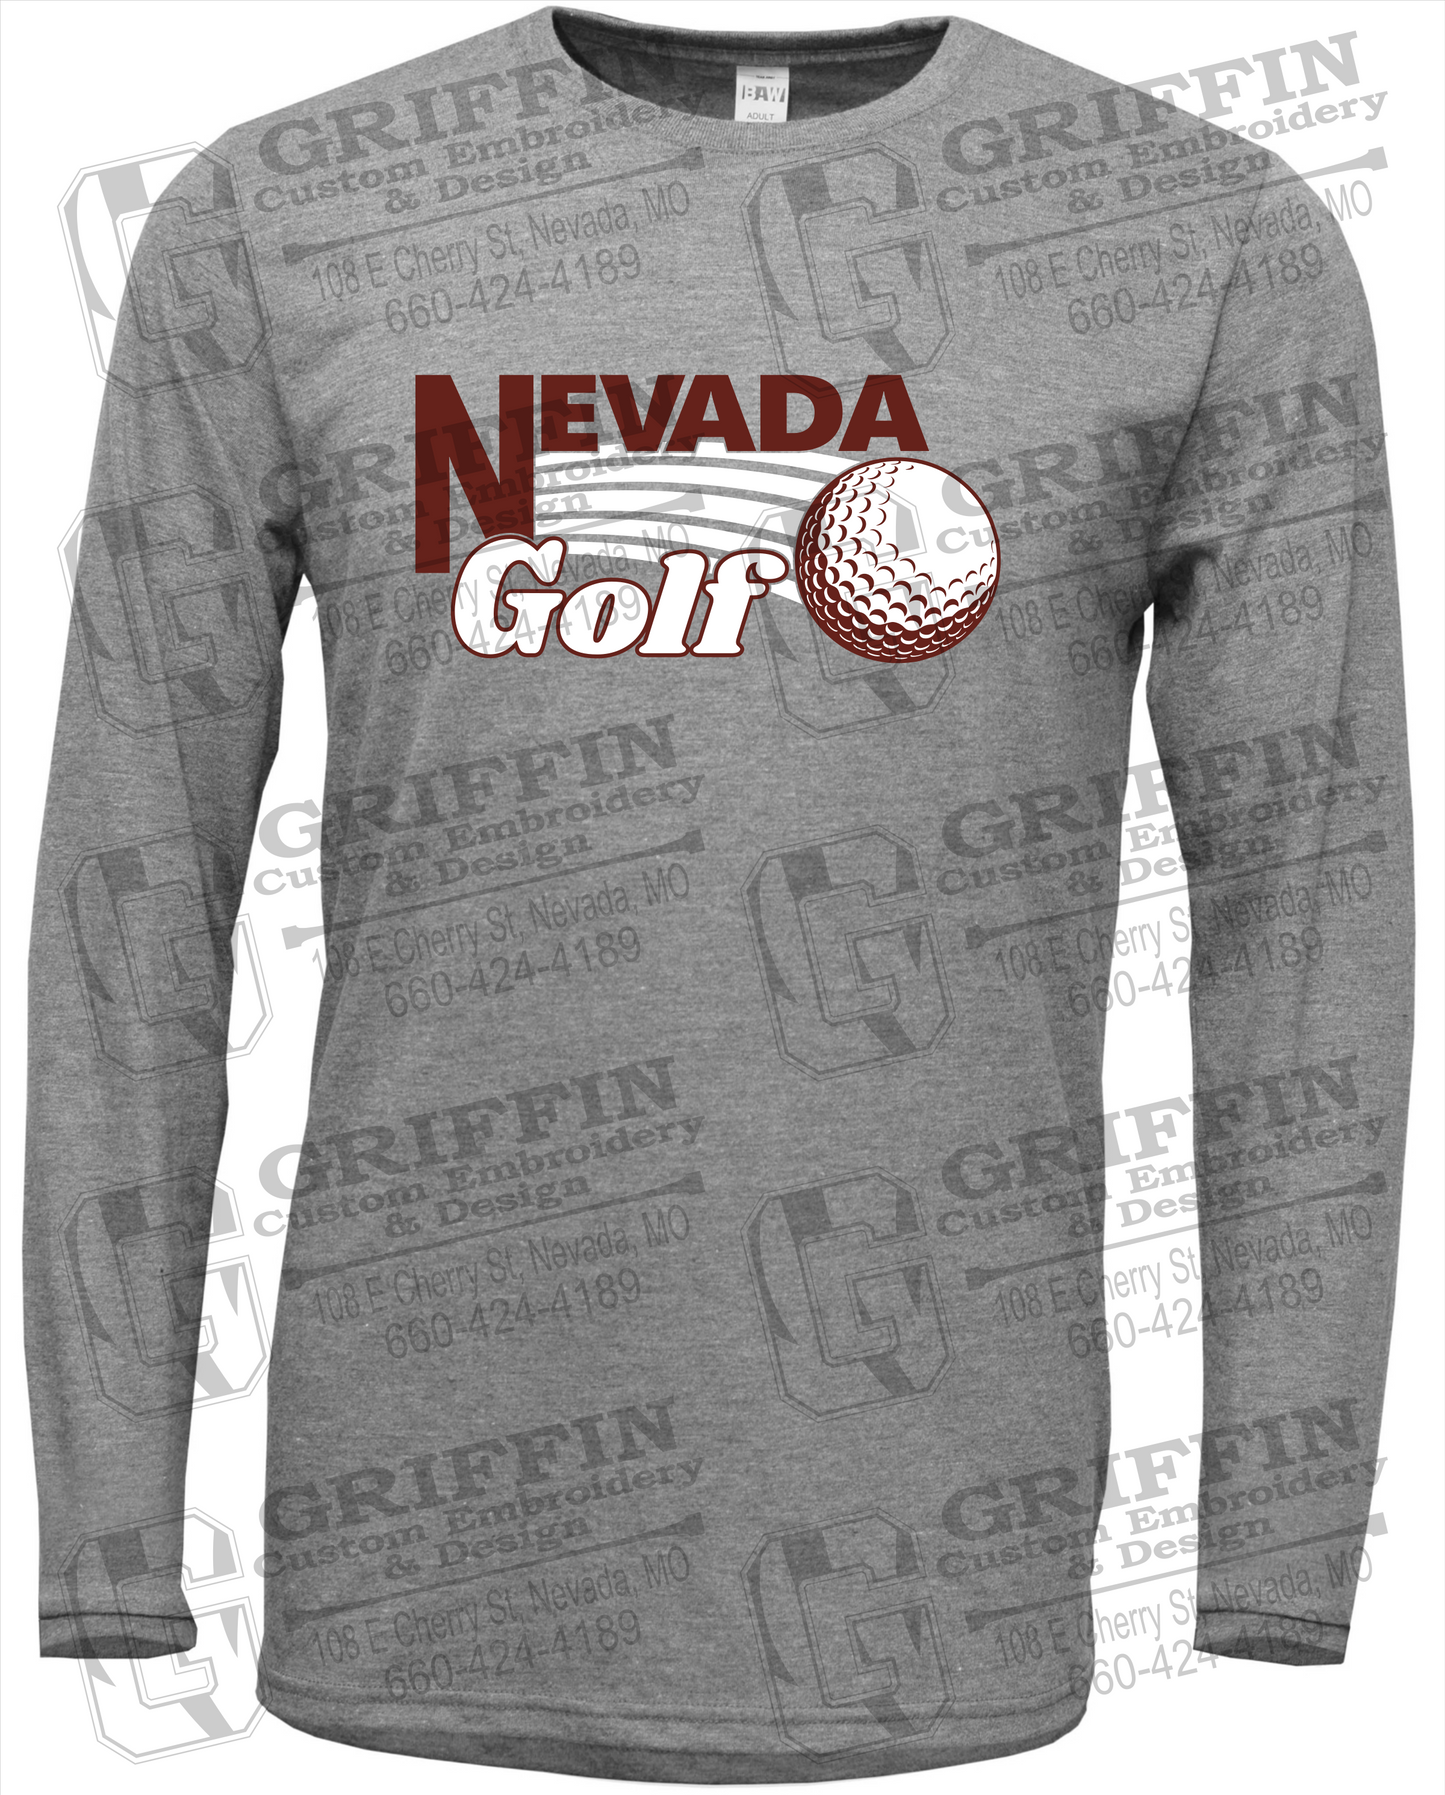 Soft-Tek Long Sleeve T-Shirt - Golf - Nevada Tigers 21-W